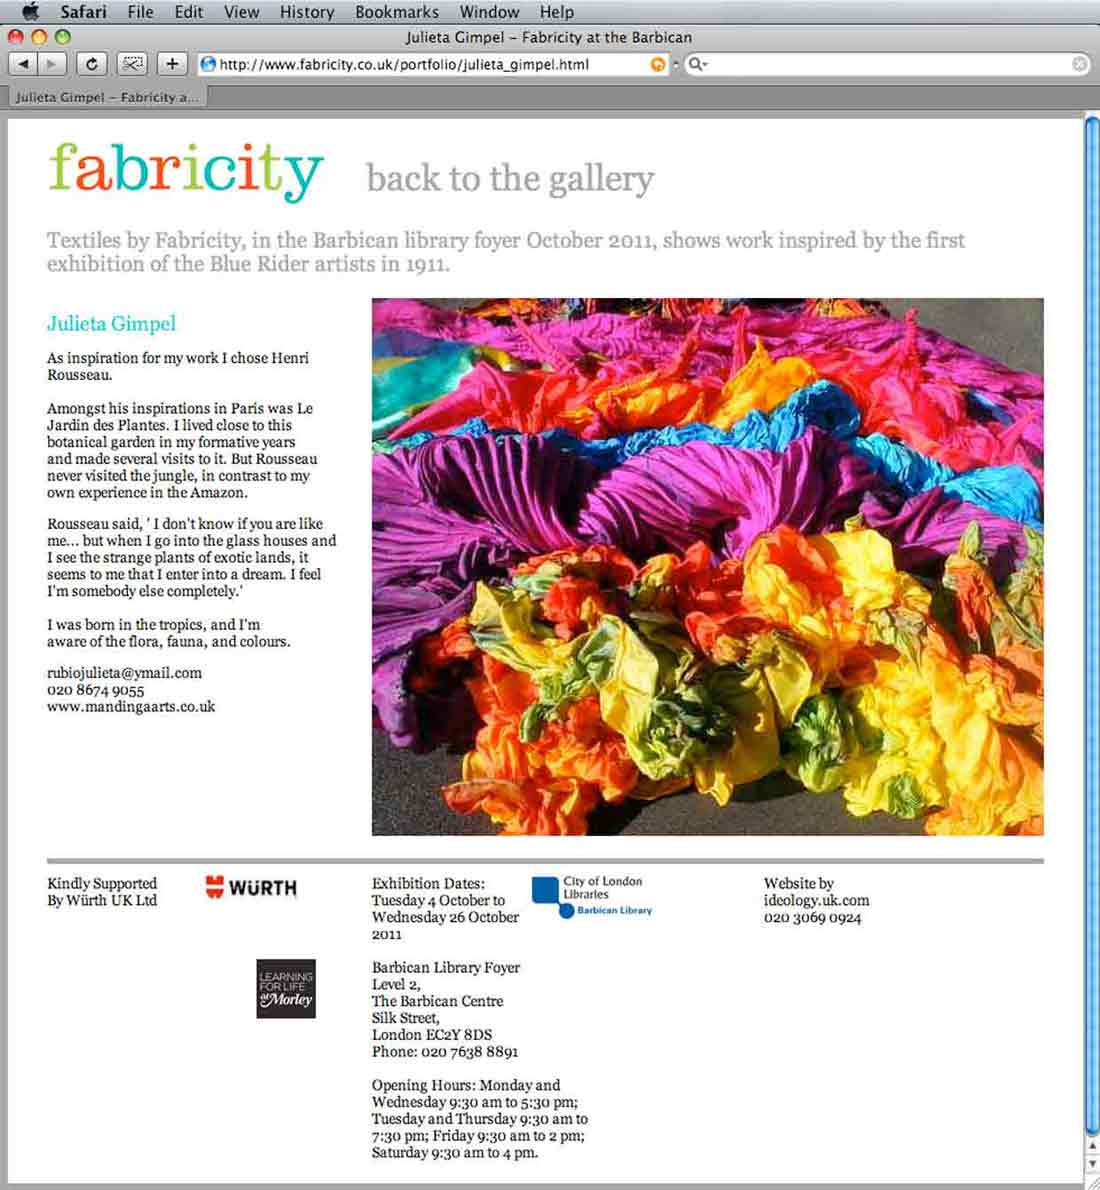 Fabricity website portfolio page designed by ideology.uk.com